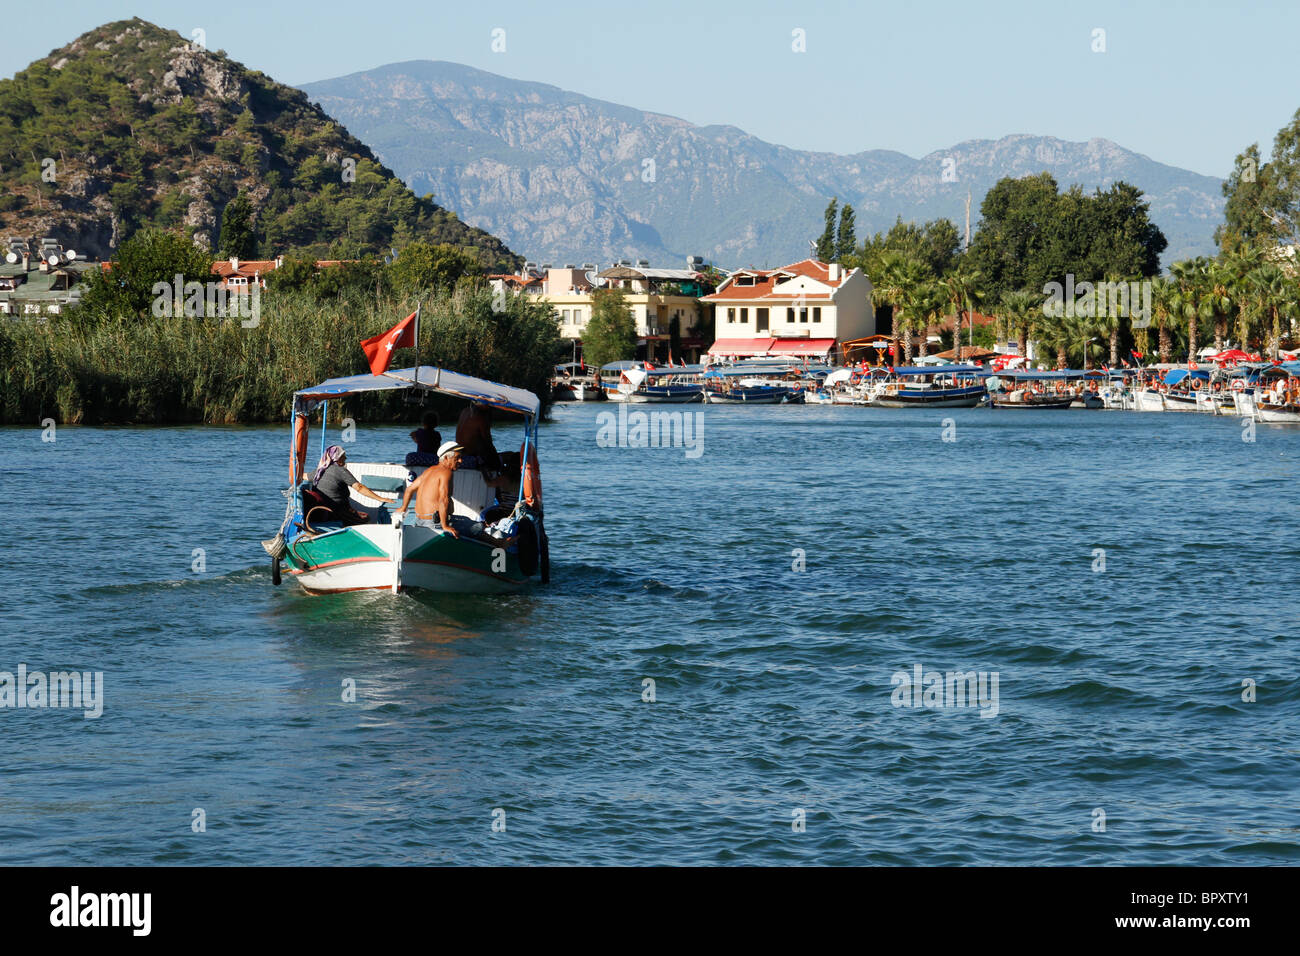 Boat on Dalyan River, Turkey Stock Photo